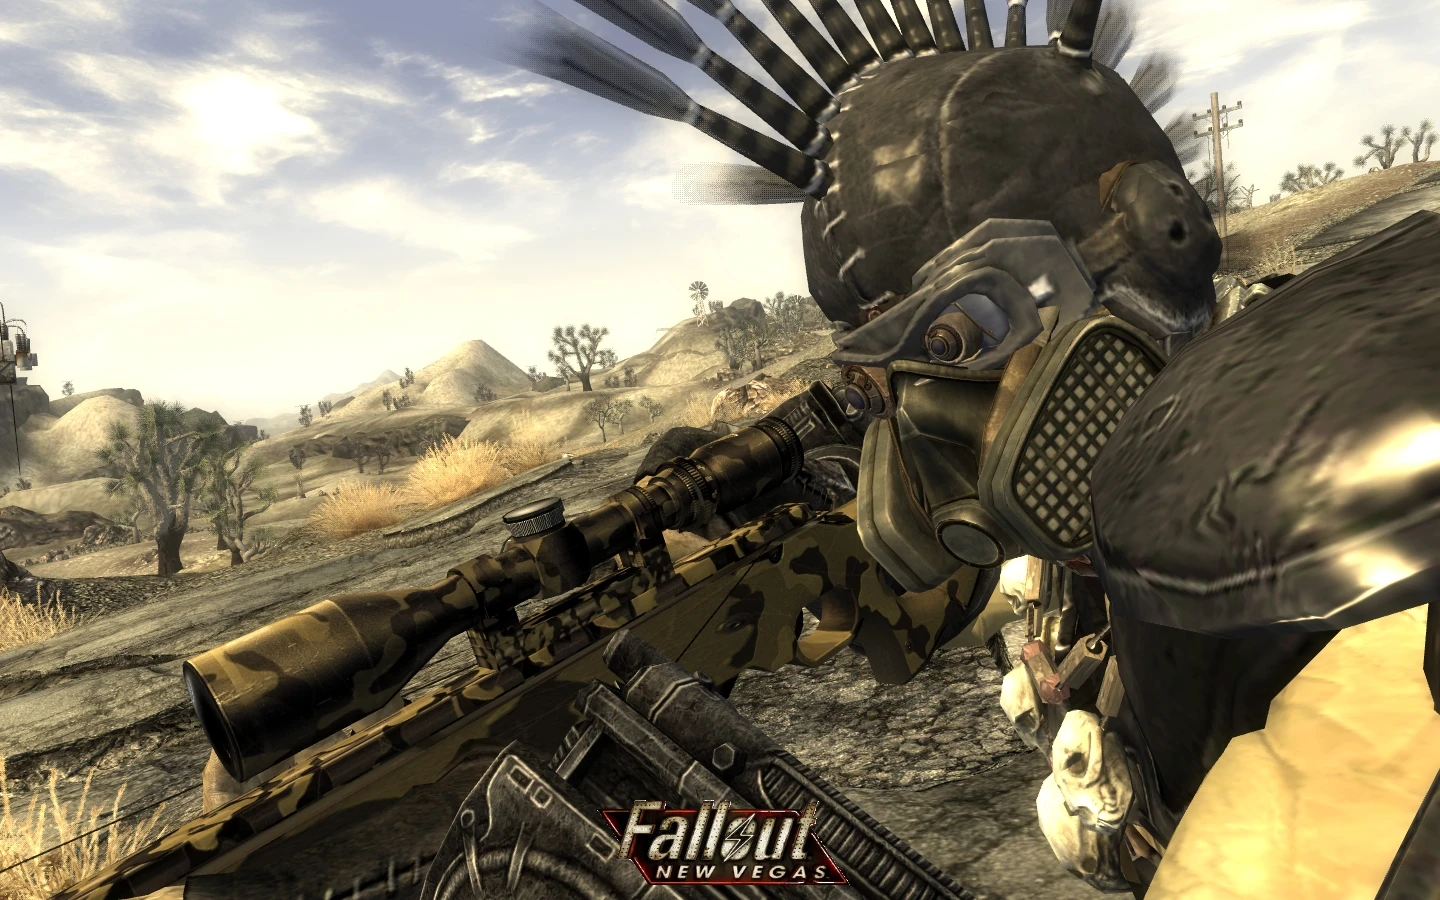 Raider Hunter at Fallout New Vegas mods and community. www.nexusmods.com. 